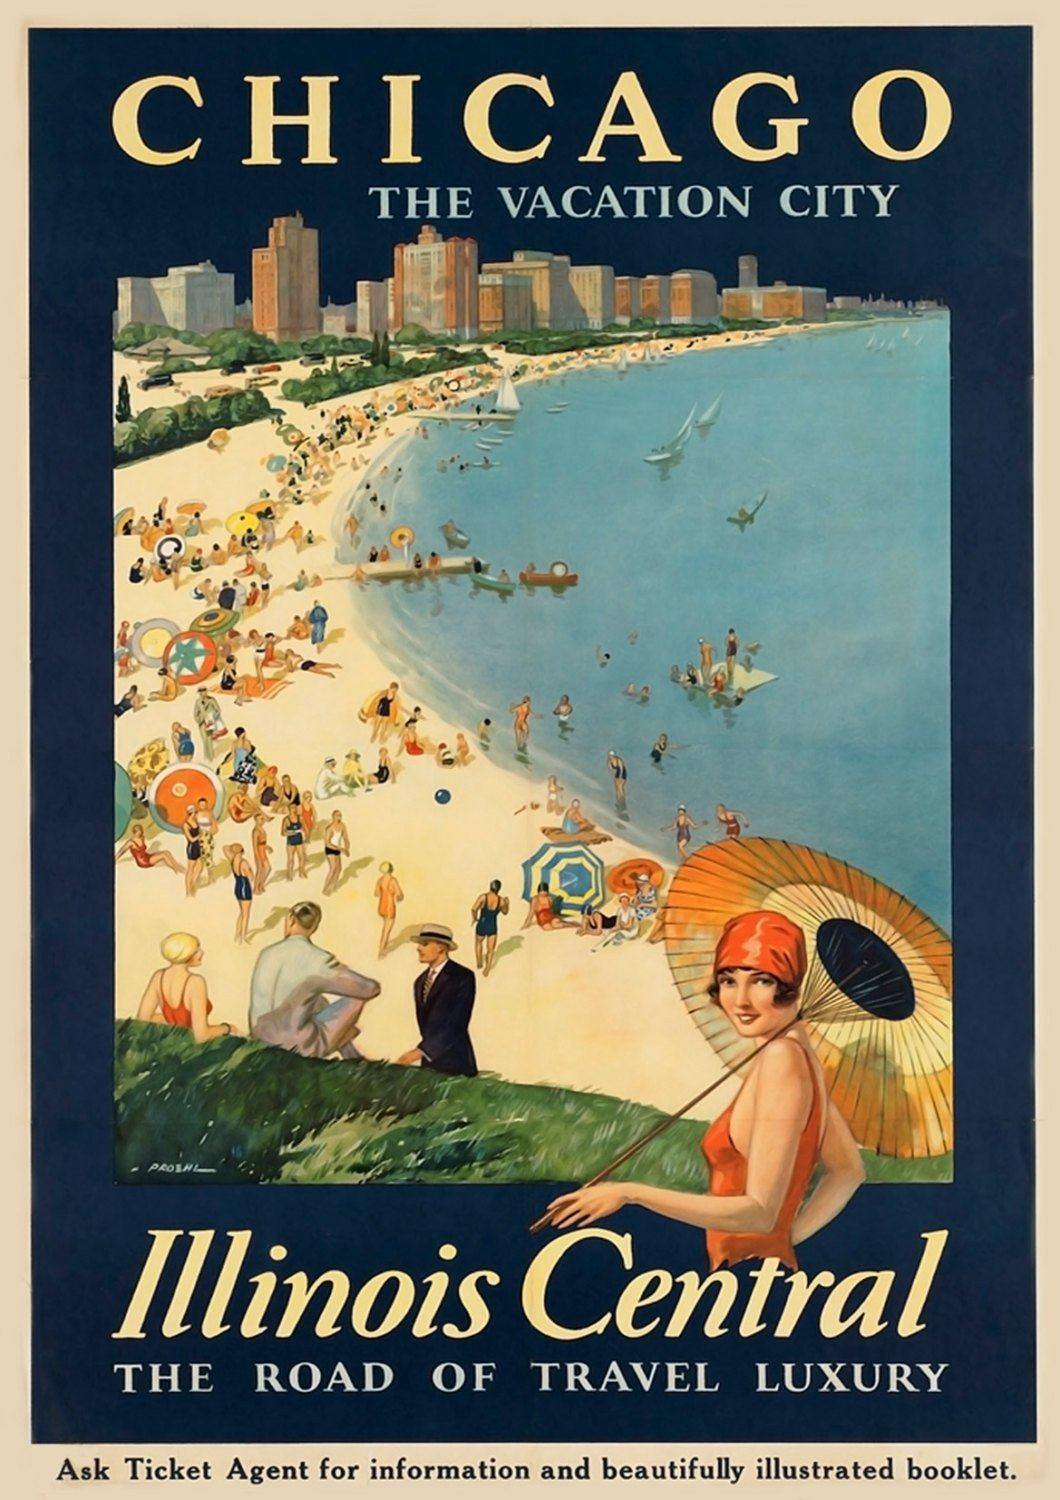 CHICAGO ILLINOIS POSTER: Vintage Travel Advert - Pimlico Prints